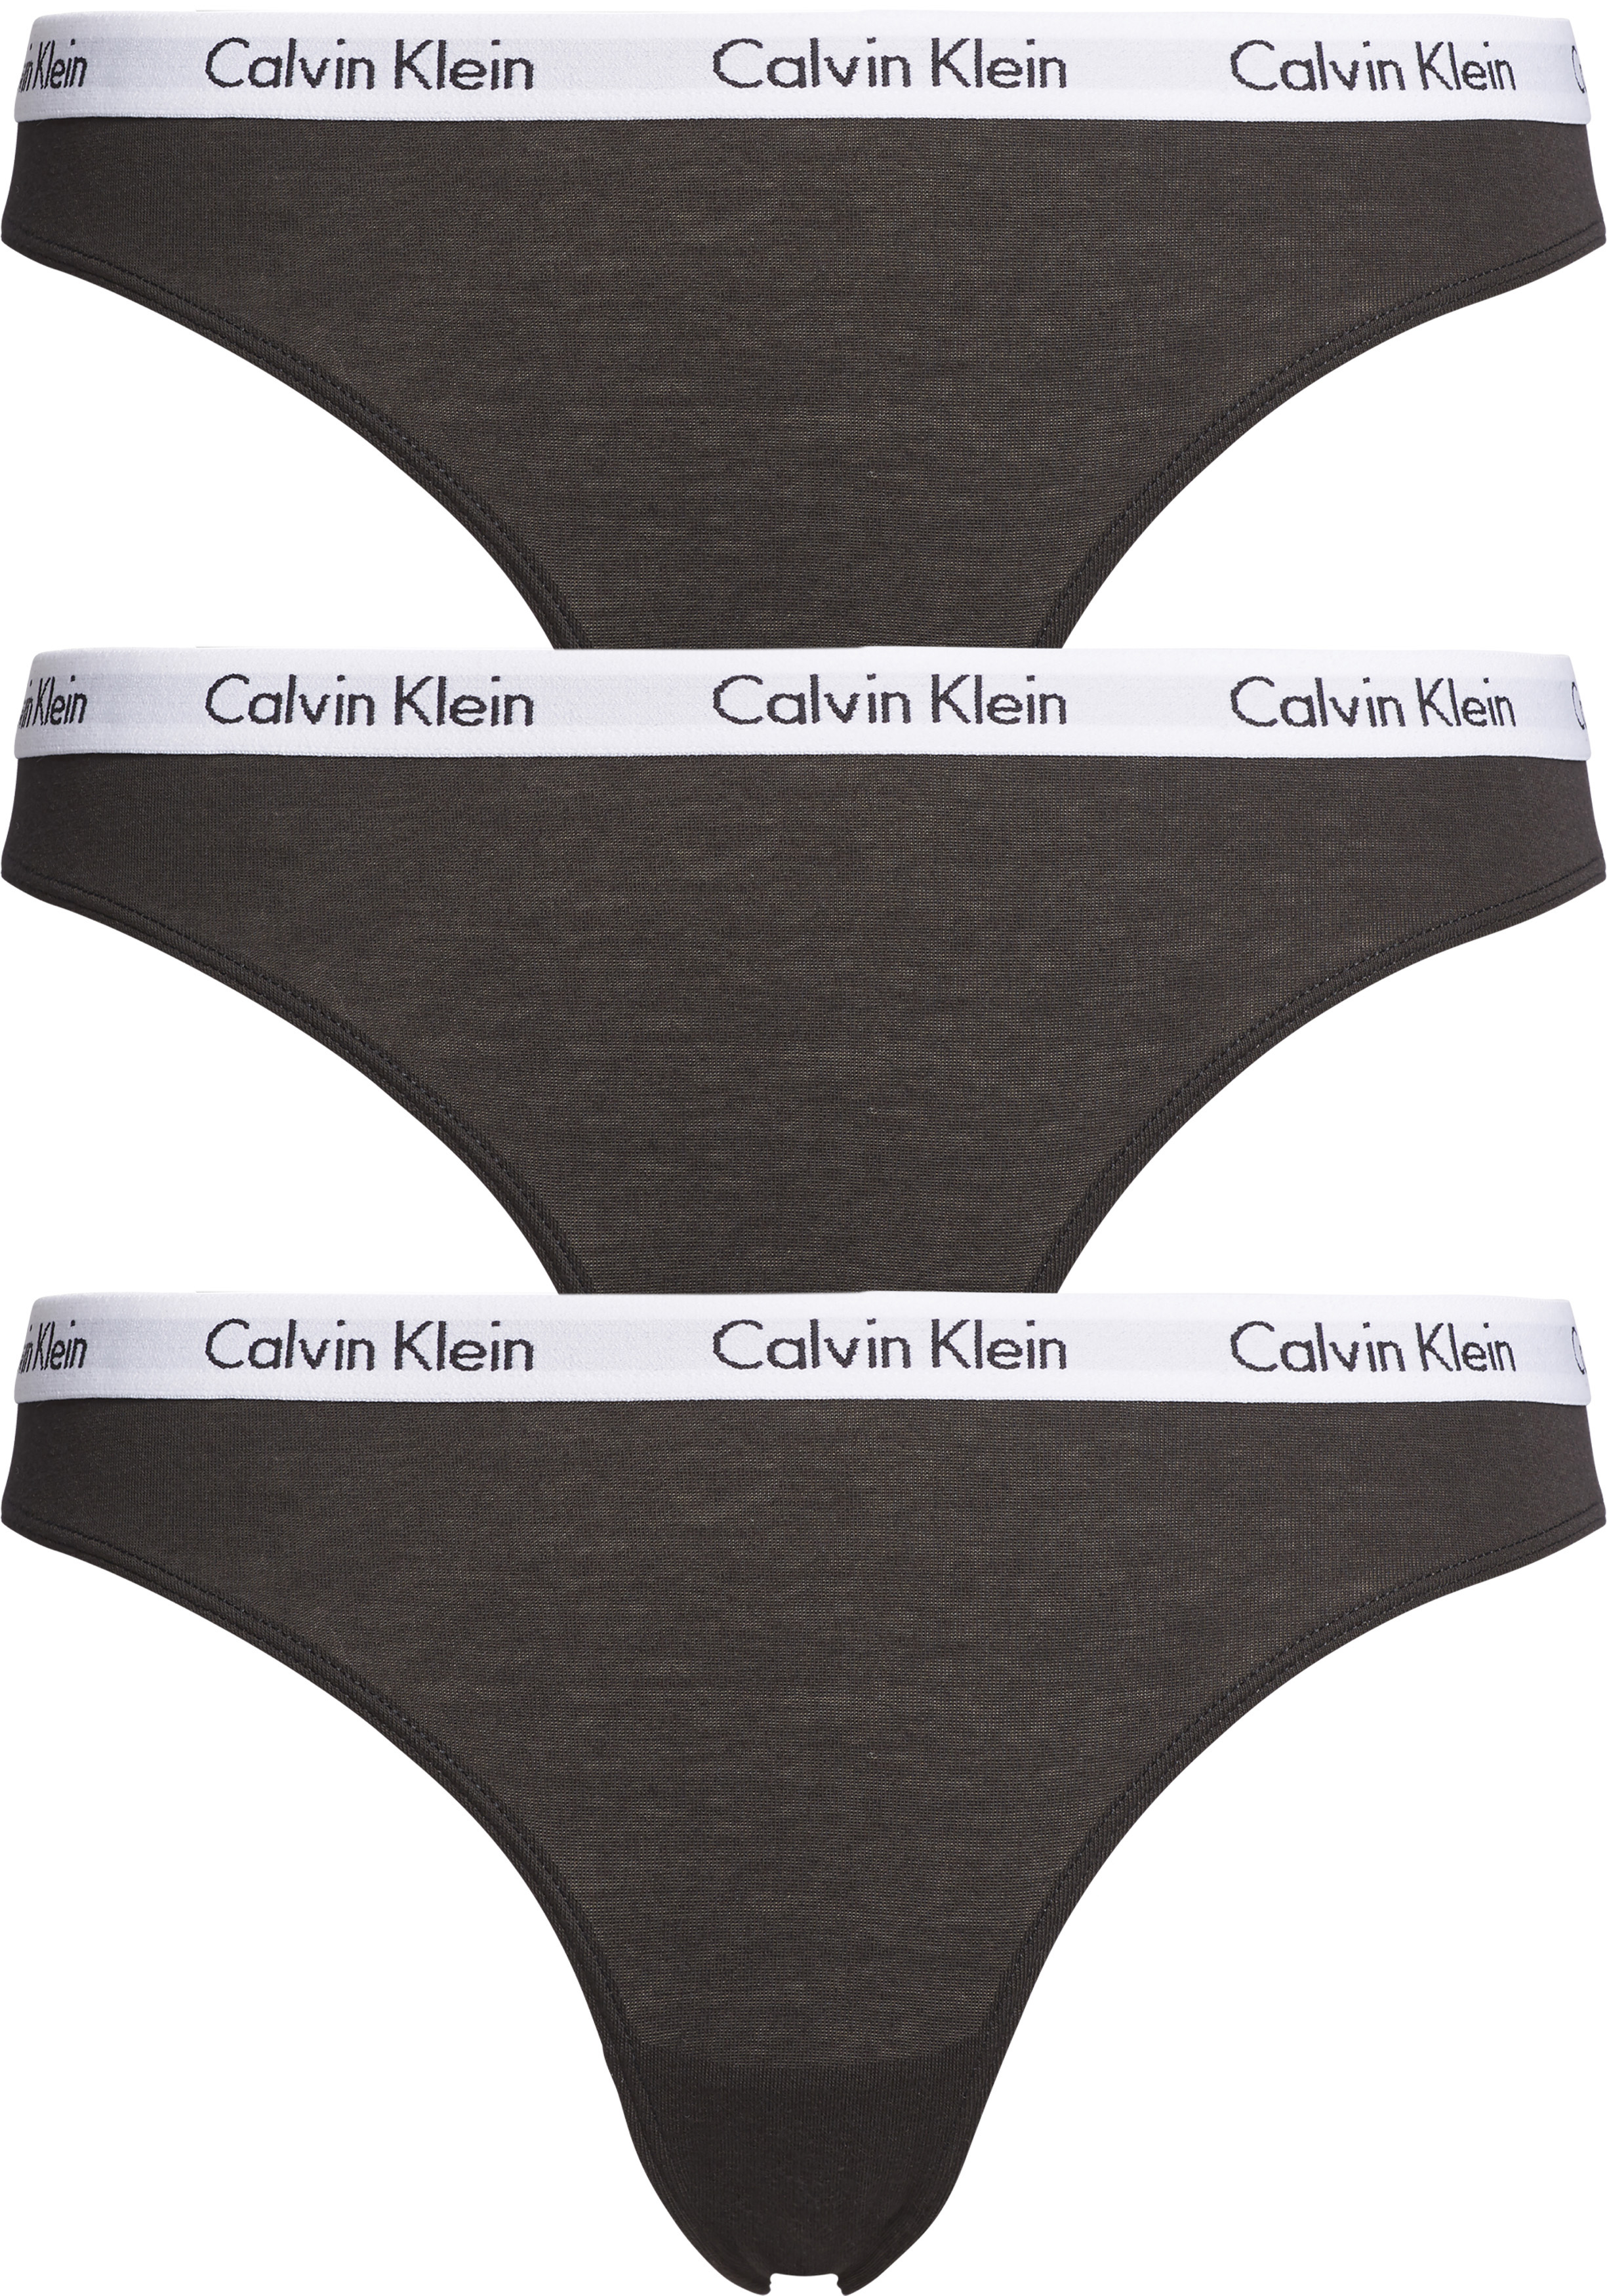 Laboratorium reflecteren Transformator Calvin Klein dames slips (3-pack), zwart - Zomer SALE tot 50% korting